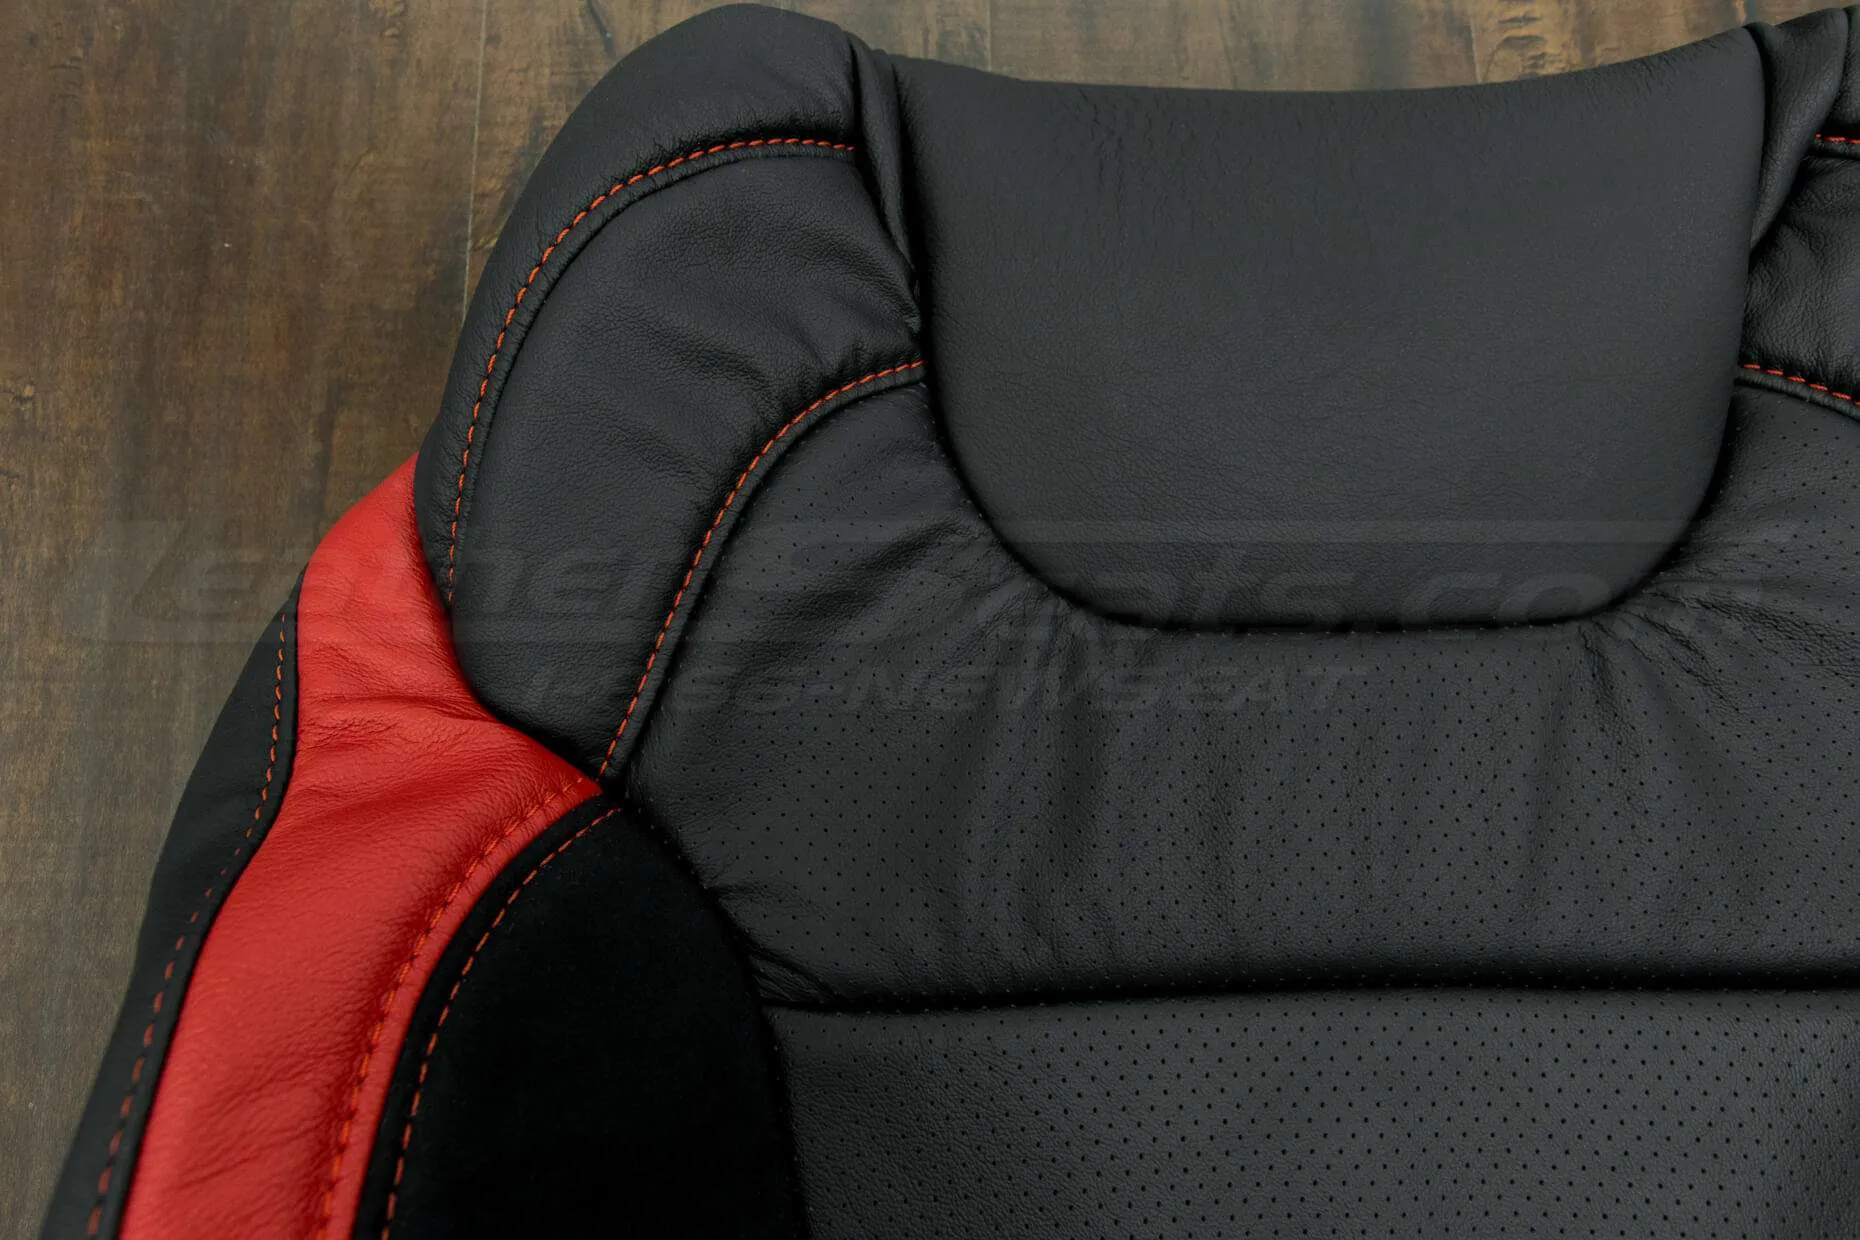 Ford Raptor Leather Upholstery Kit- Black & Bright Red - Upper section of backrest